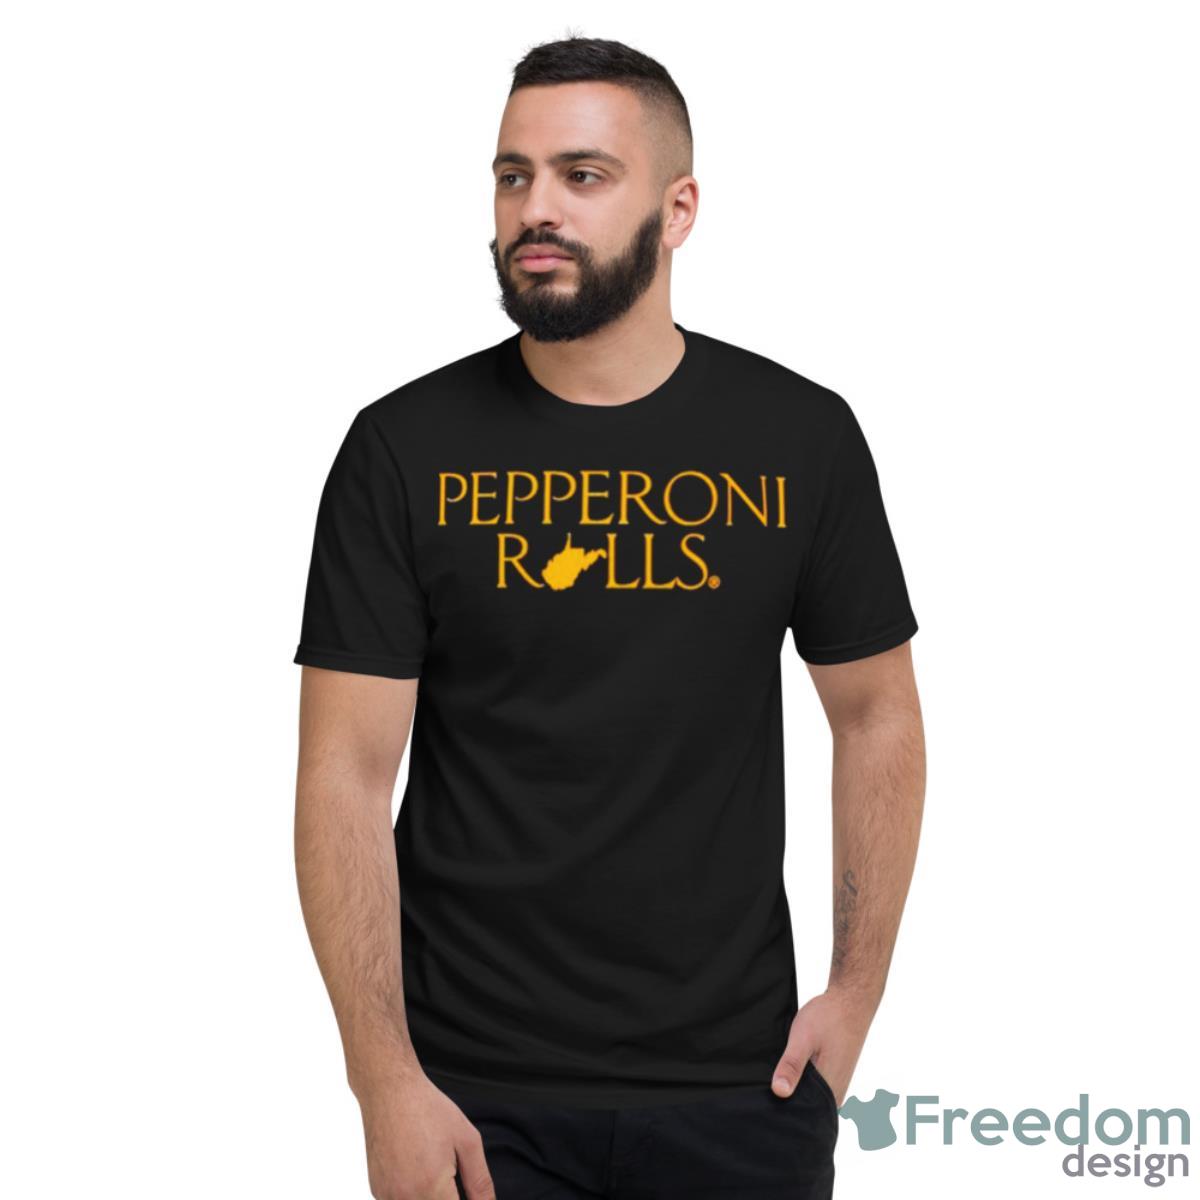 Fran Fraschilla West Virginia University Pepperoni Rolls Shirt